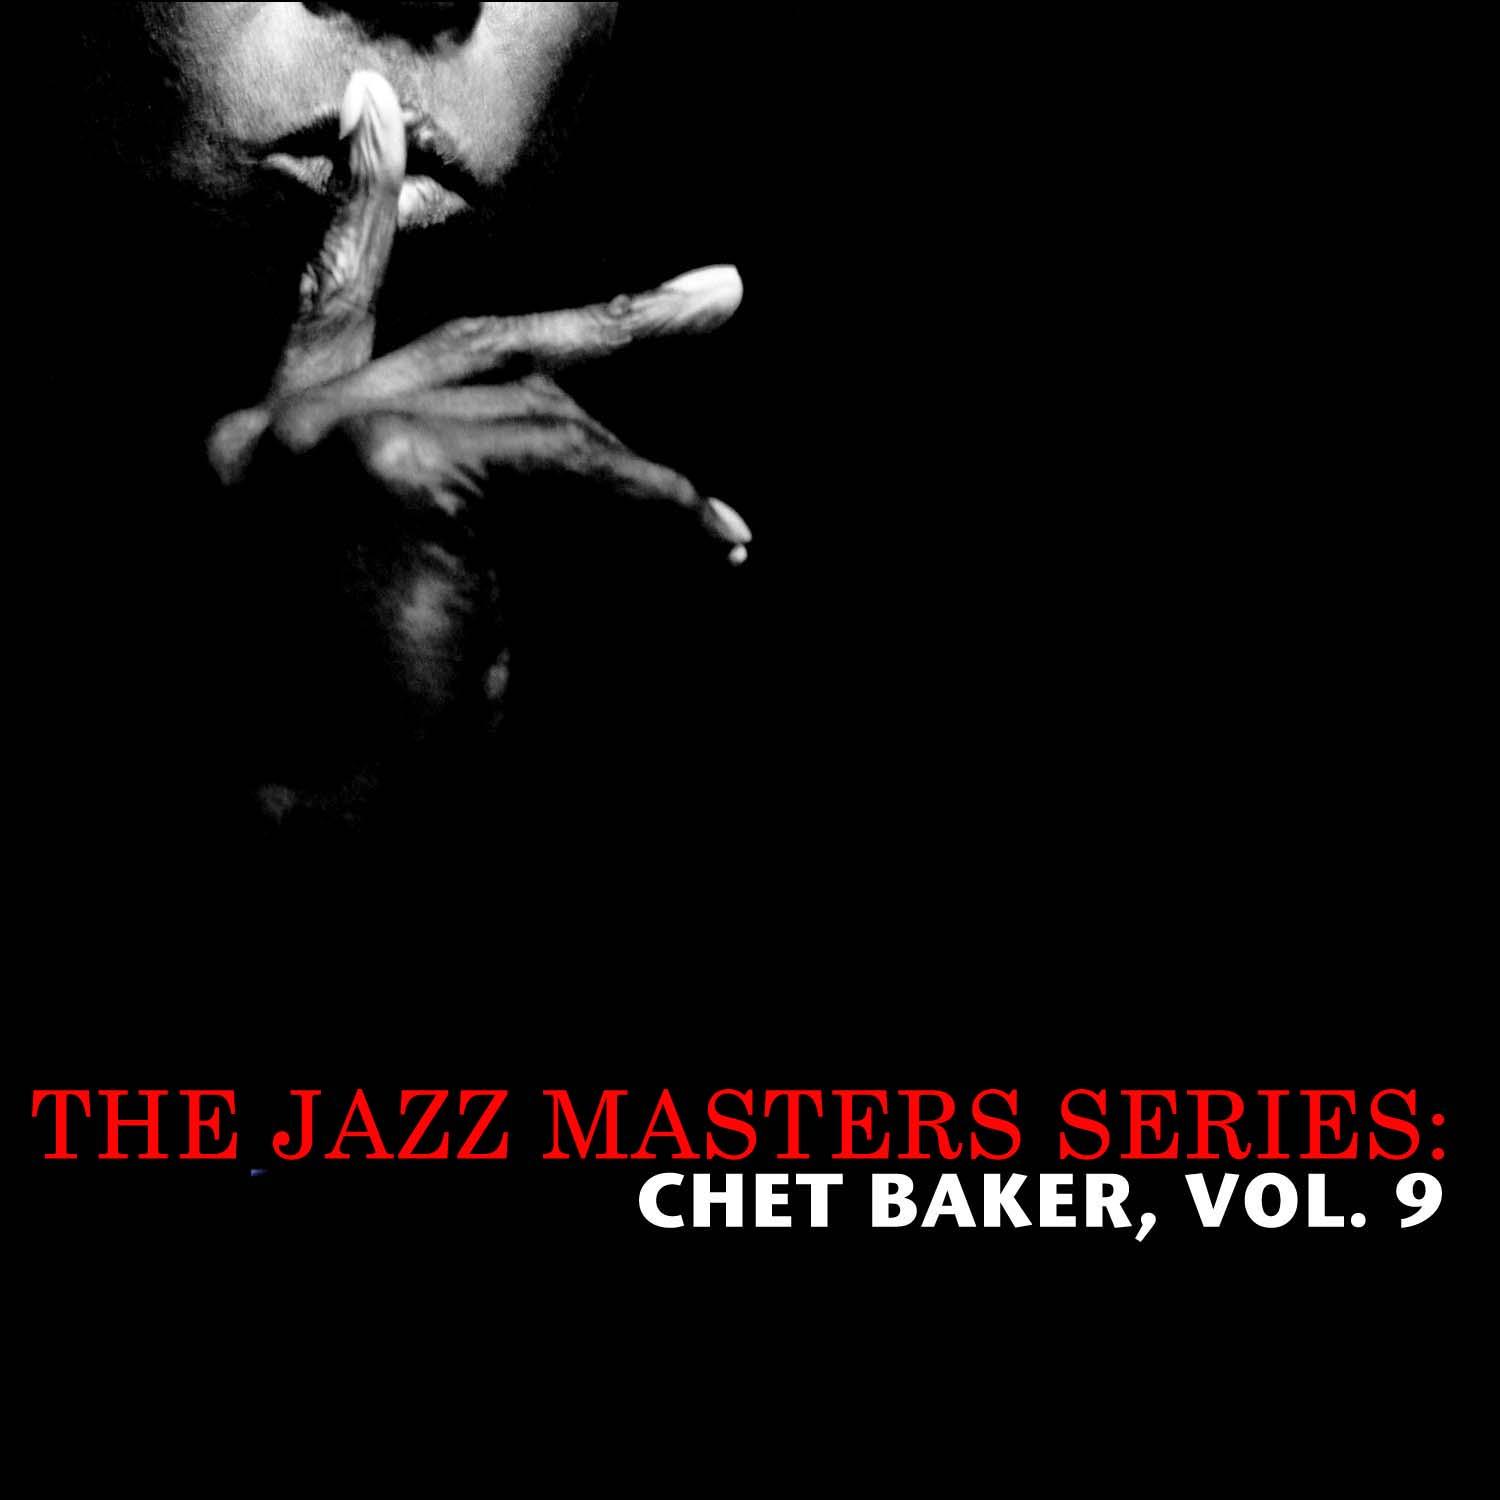 The Jazz Masters Series: Chet Baker, Vol. 9